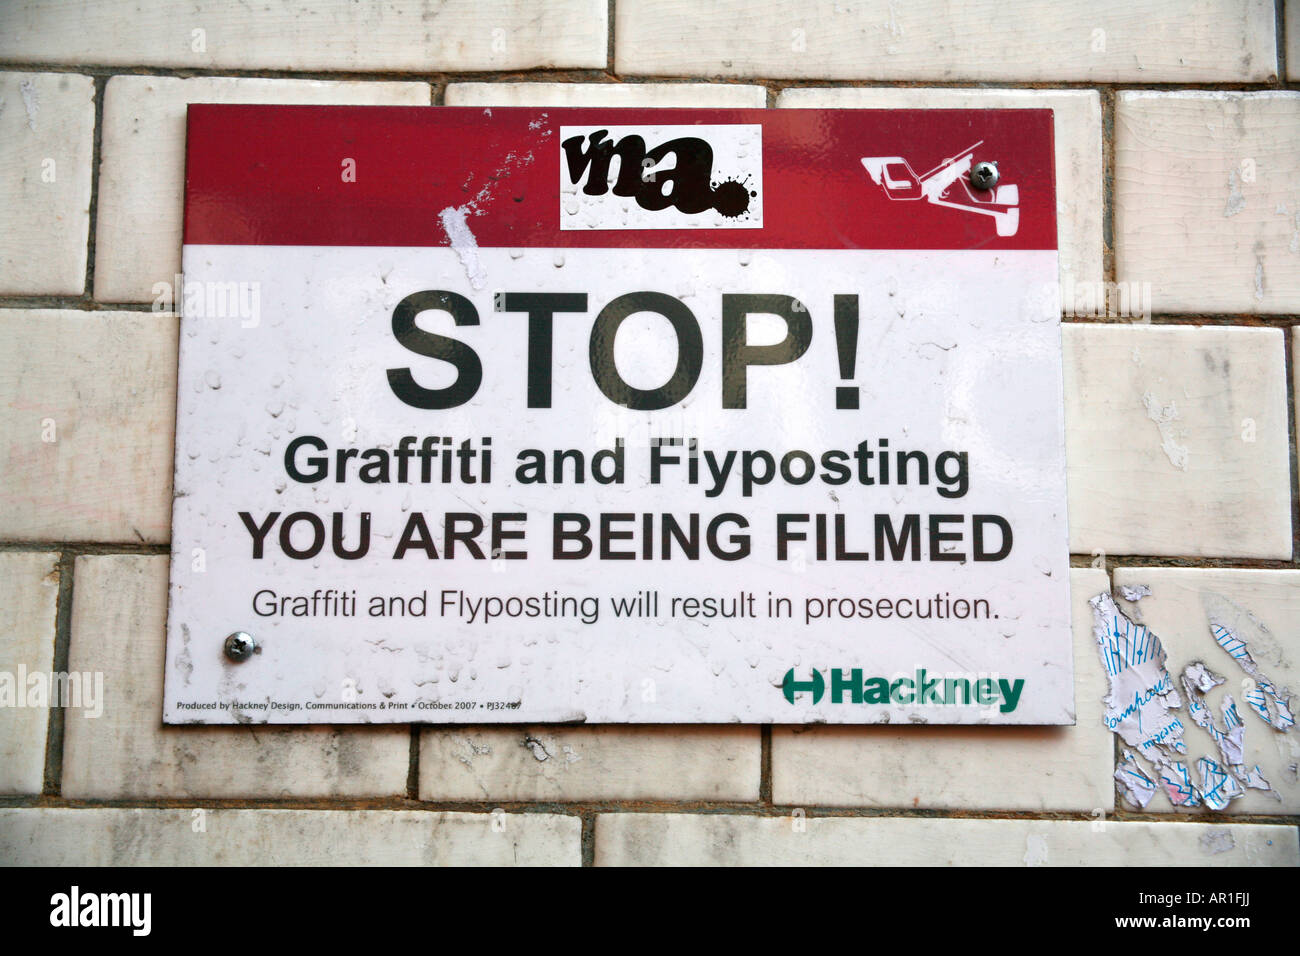 STOP Anti Graffiti and Flyposting sign in Hackney, London Stock Photo